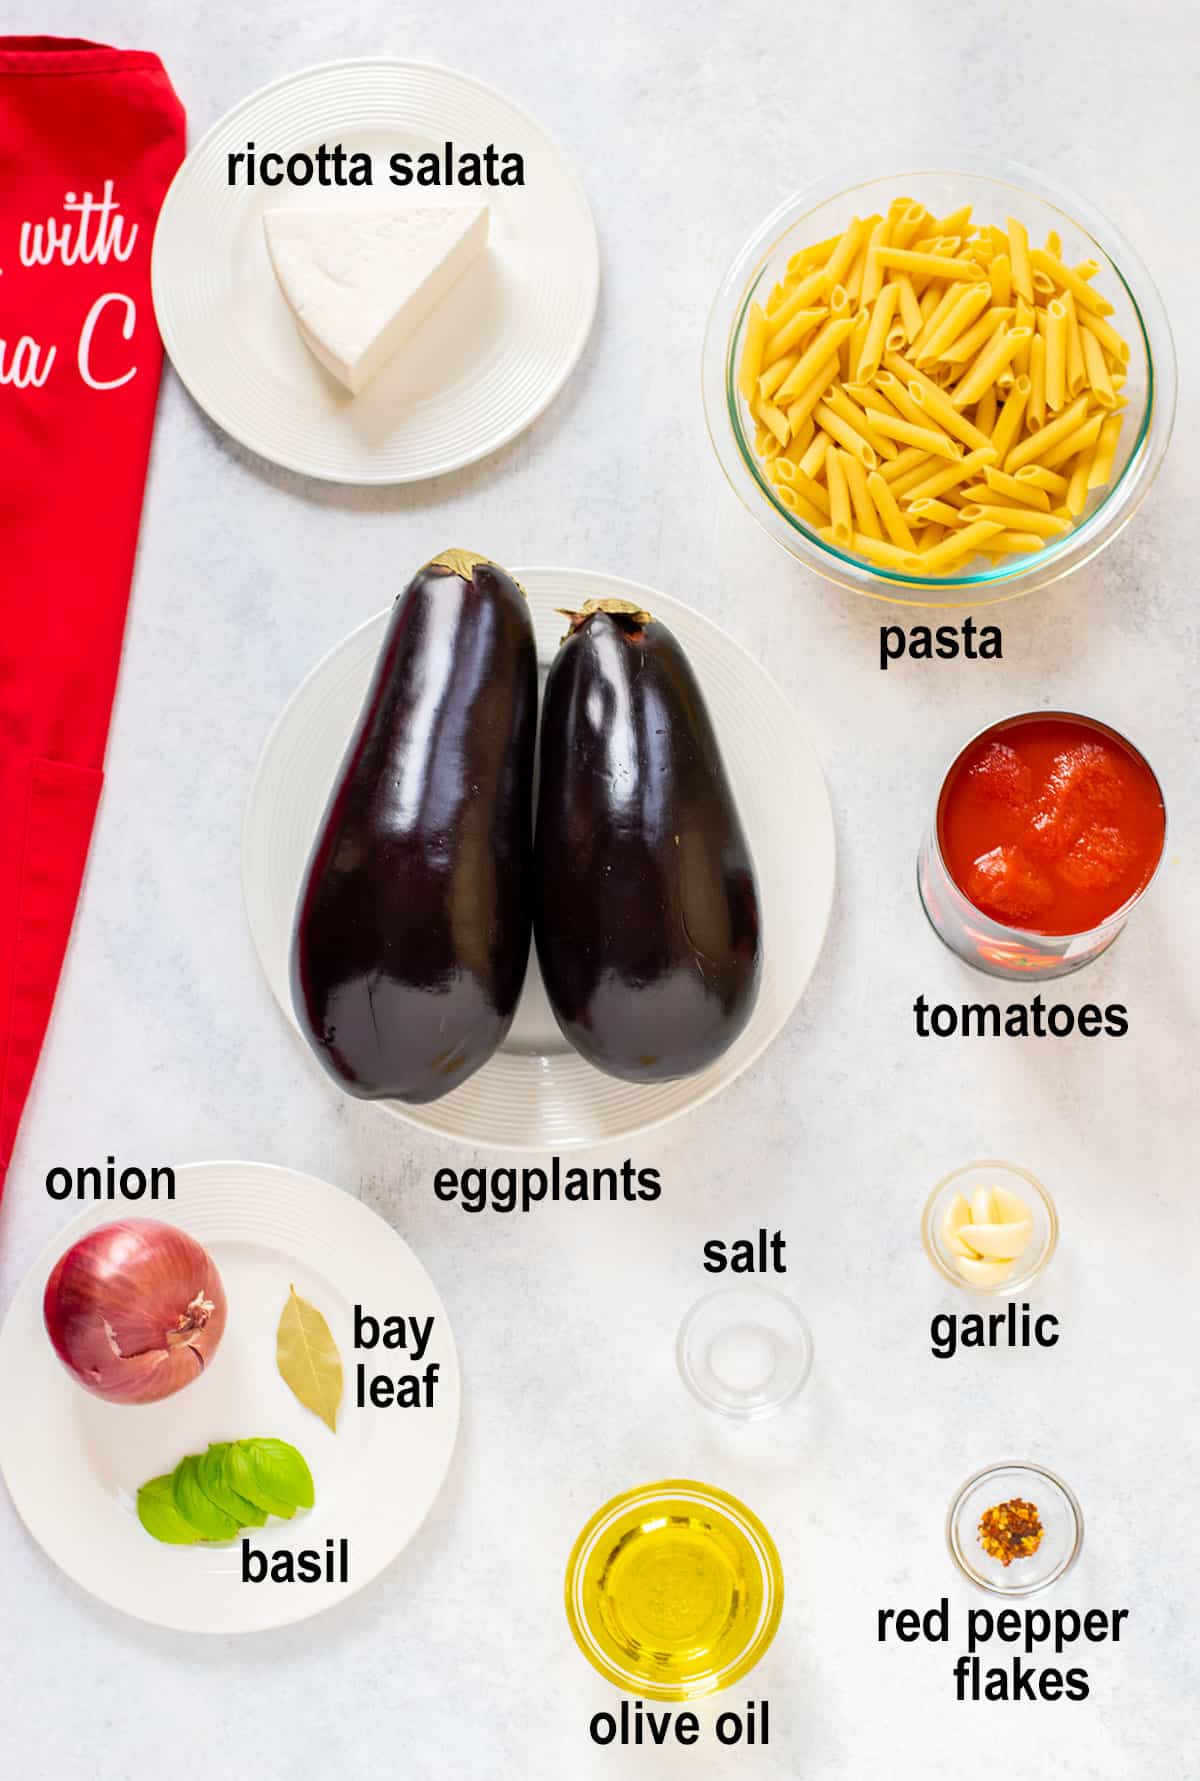 ricotta salata, pasta, eggplants, tomatoes, onion, bay leaf, basil, oil, garlic, salt, pepper.